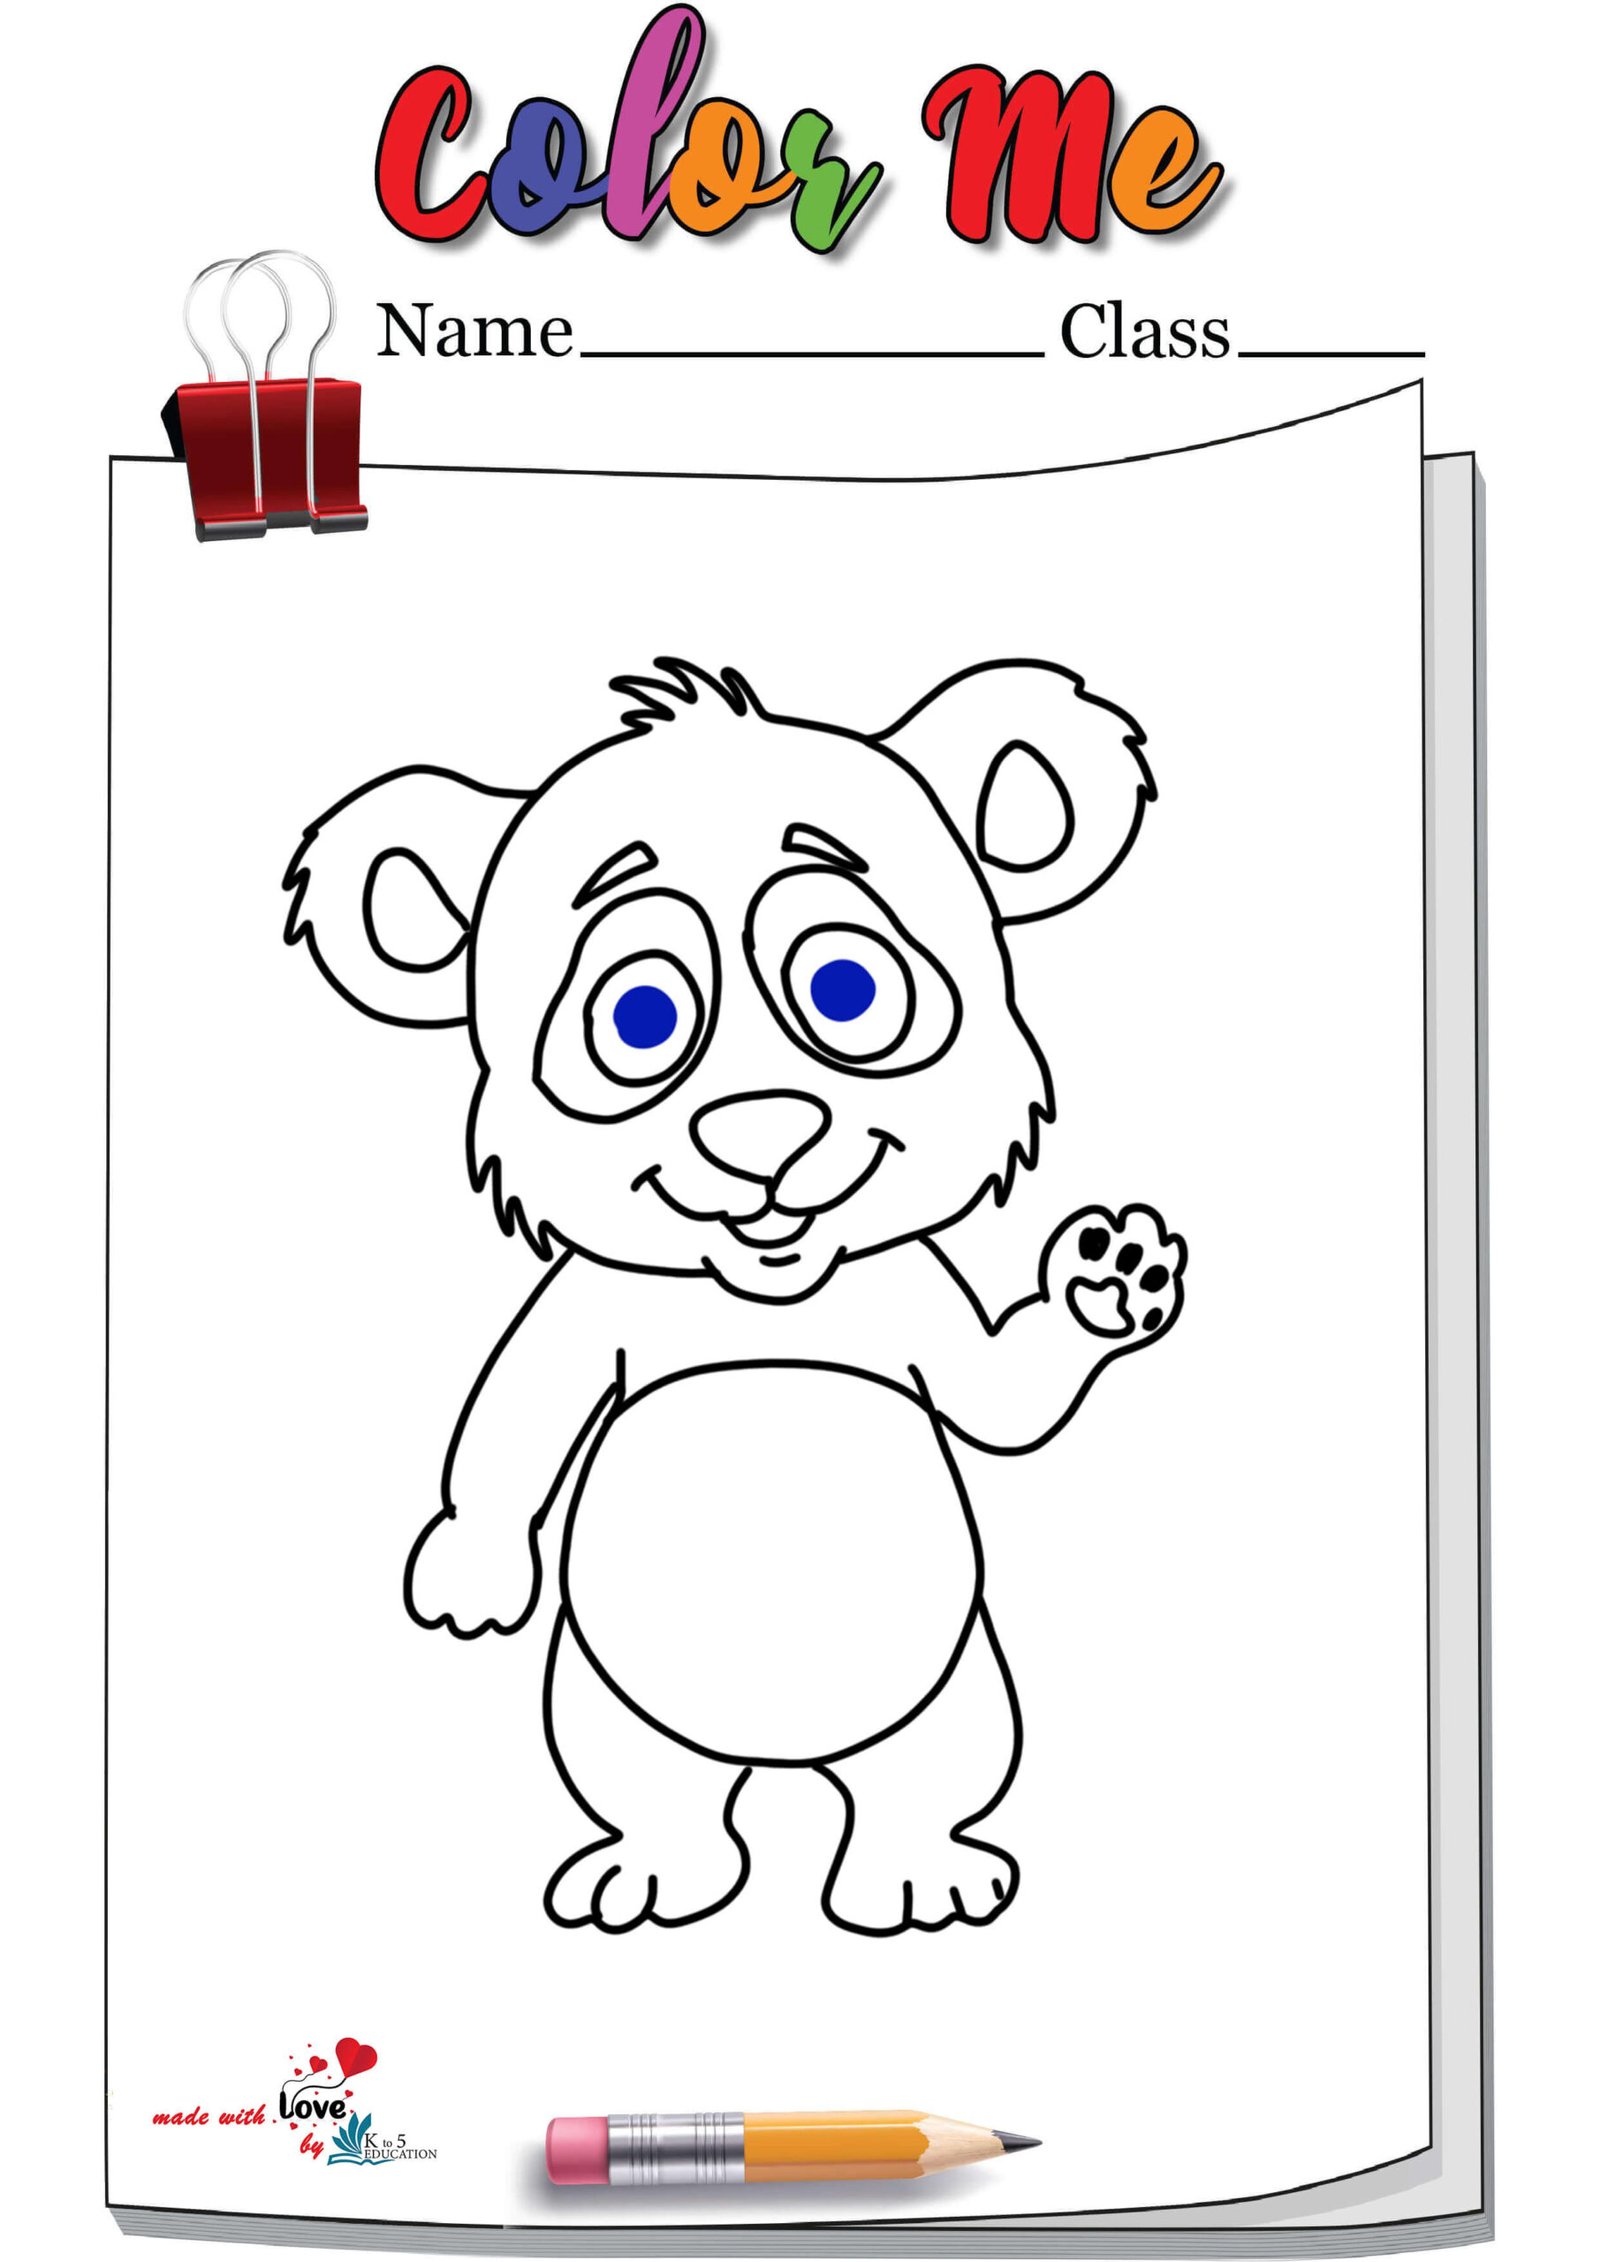 Cartoon Panda Coloring Page